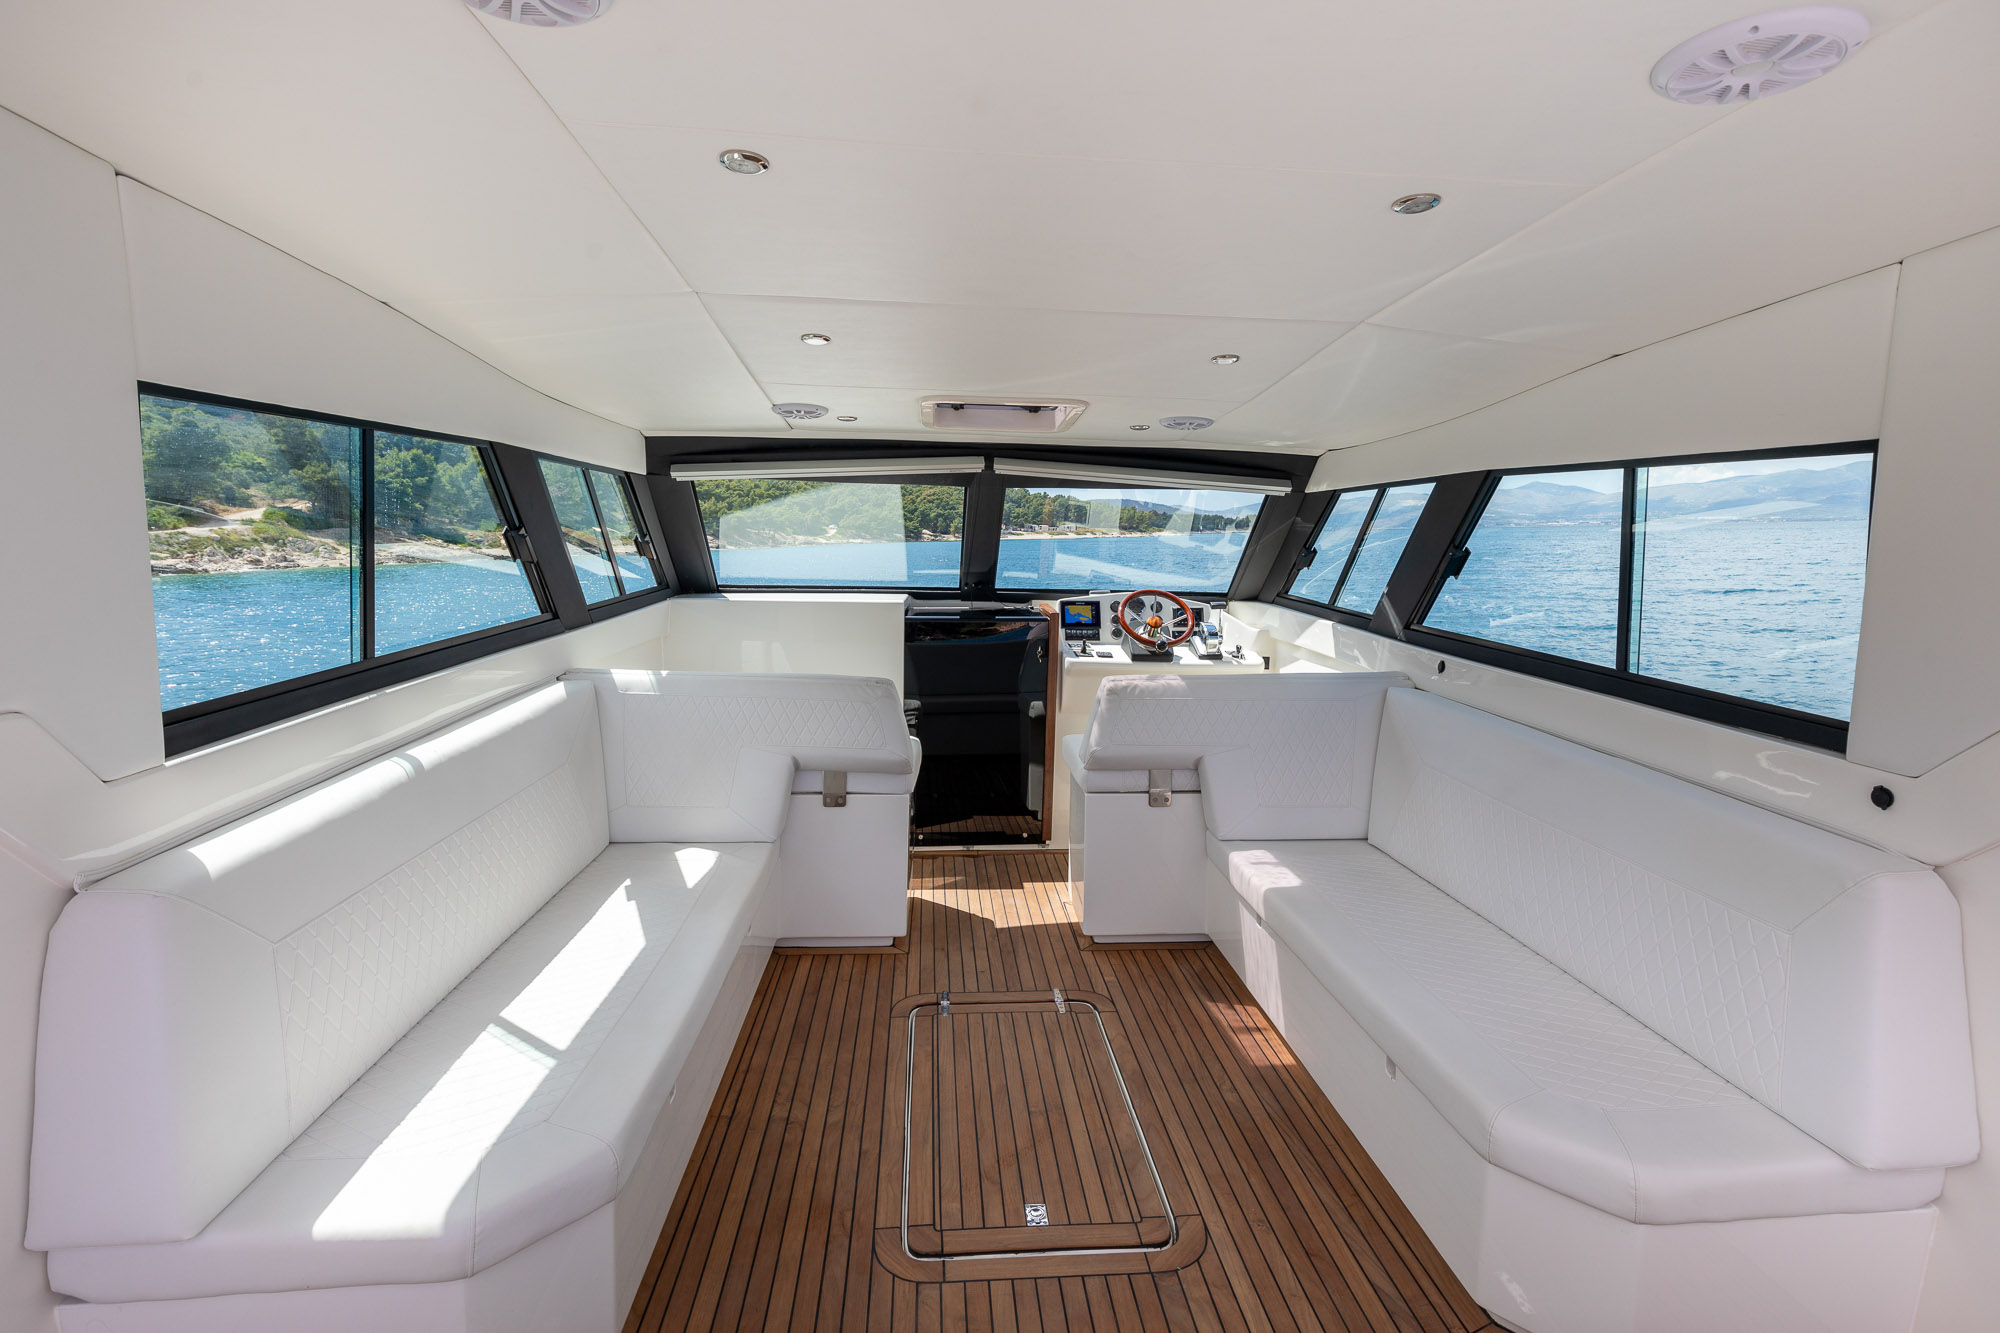 Seayou luxury cabin boat interier